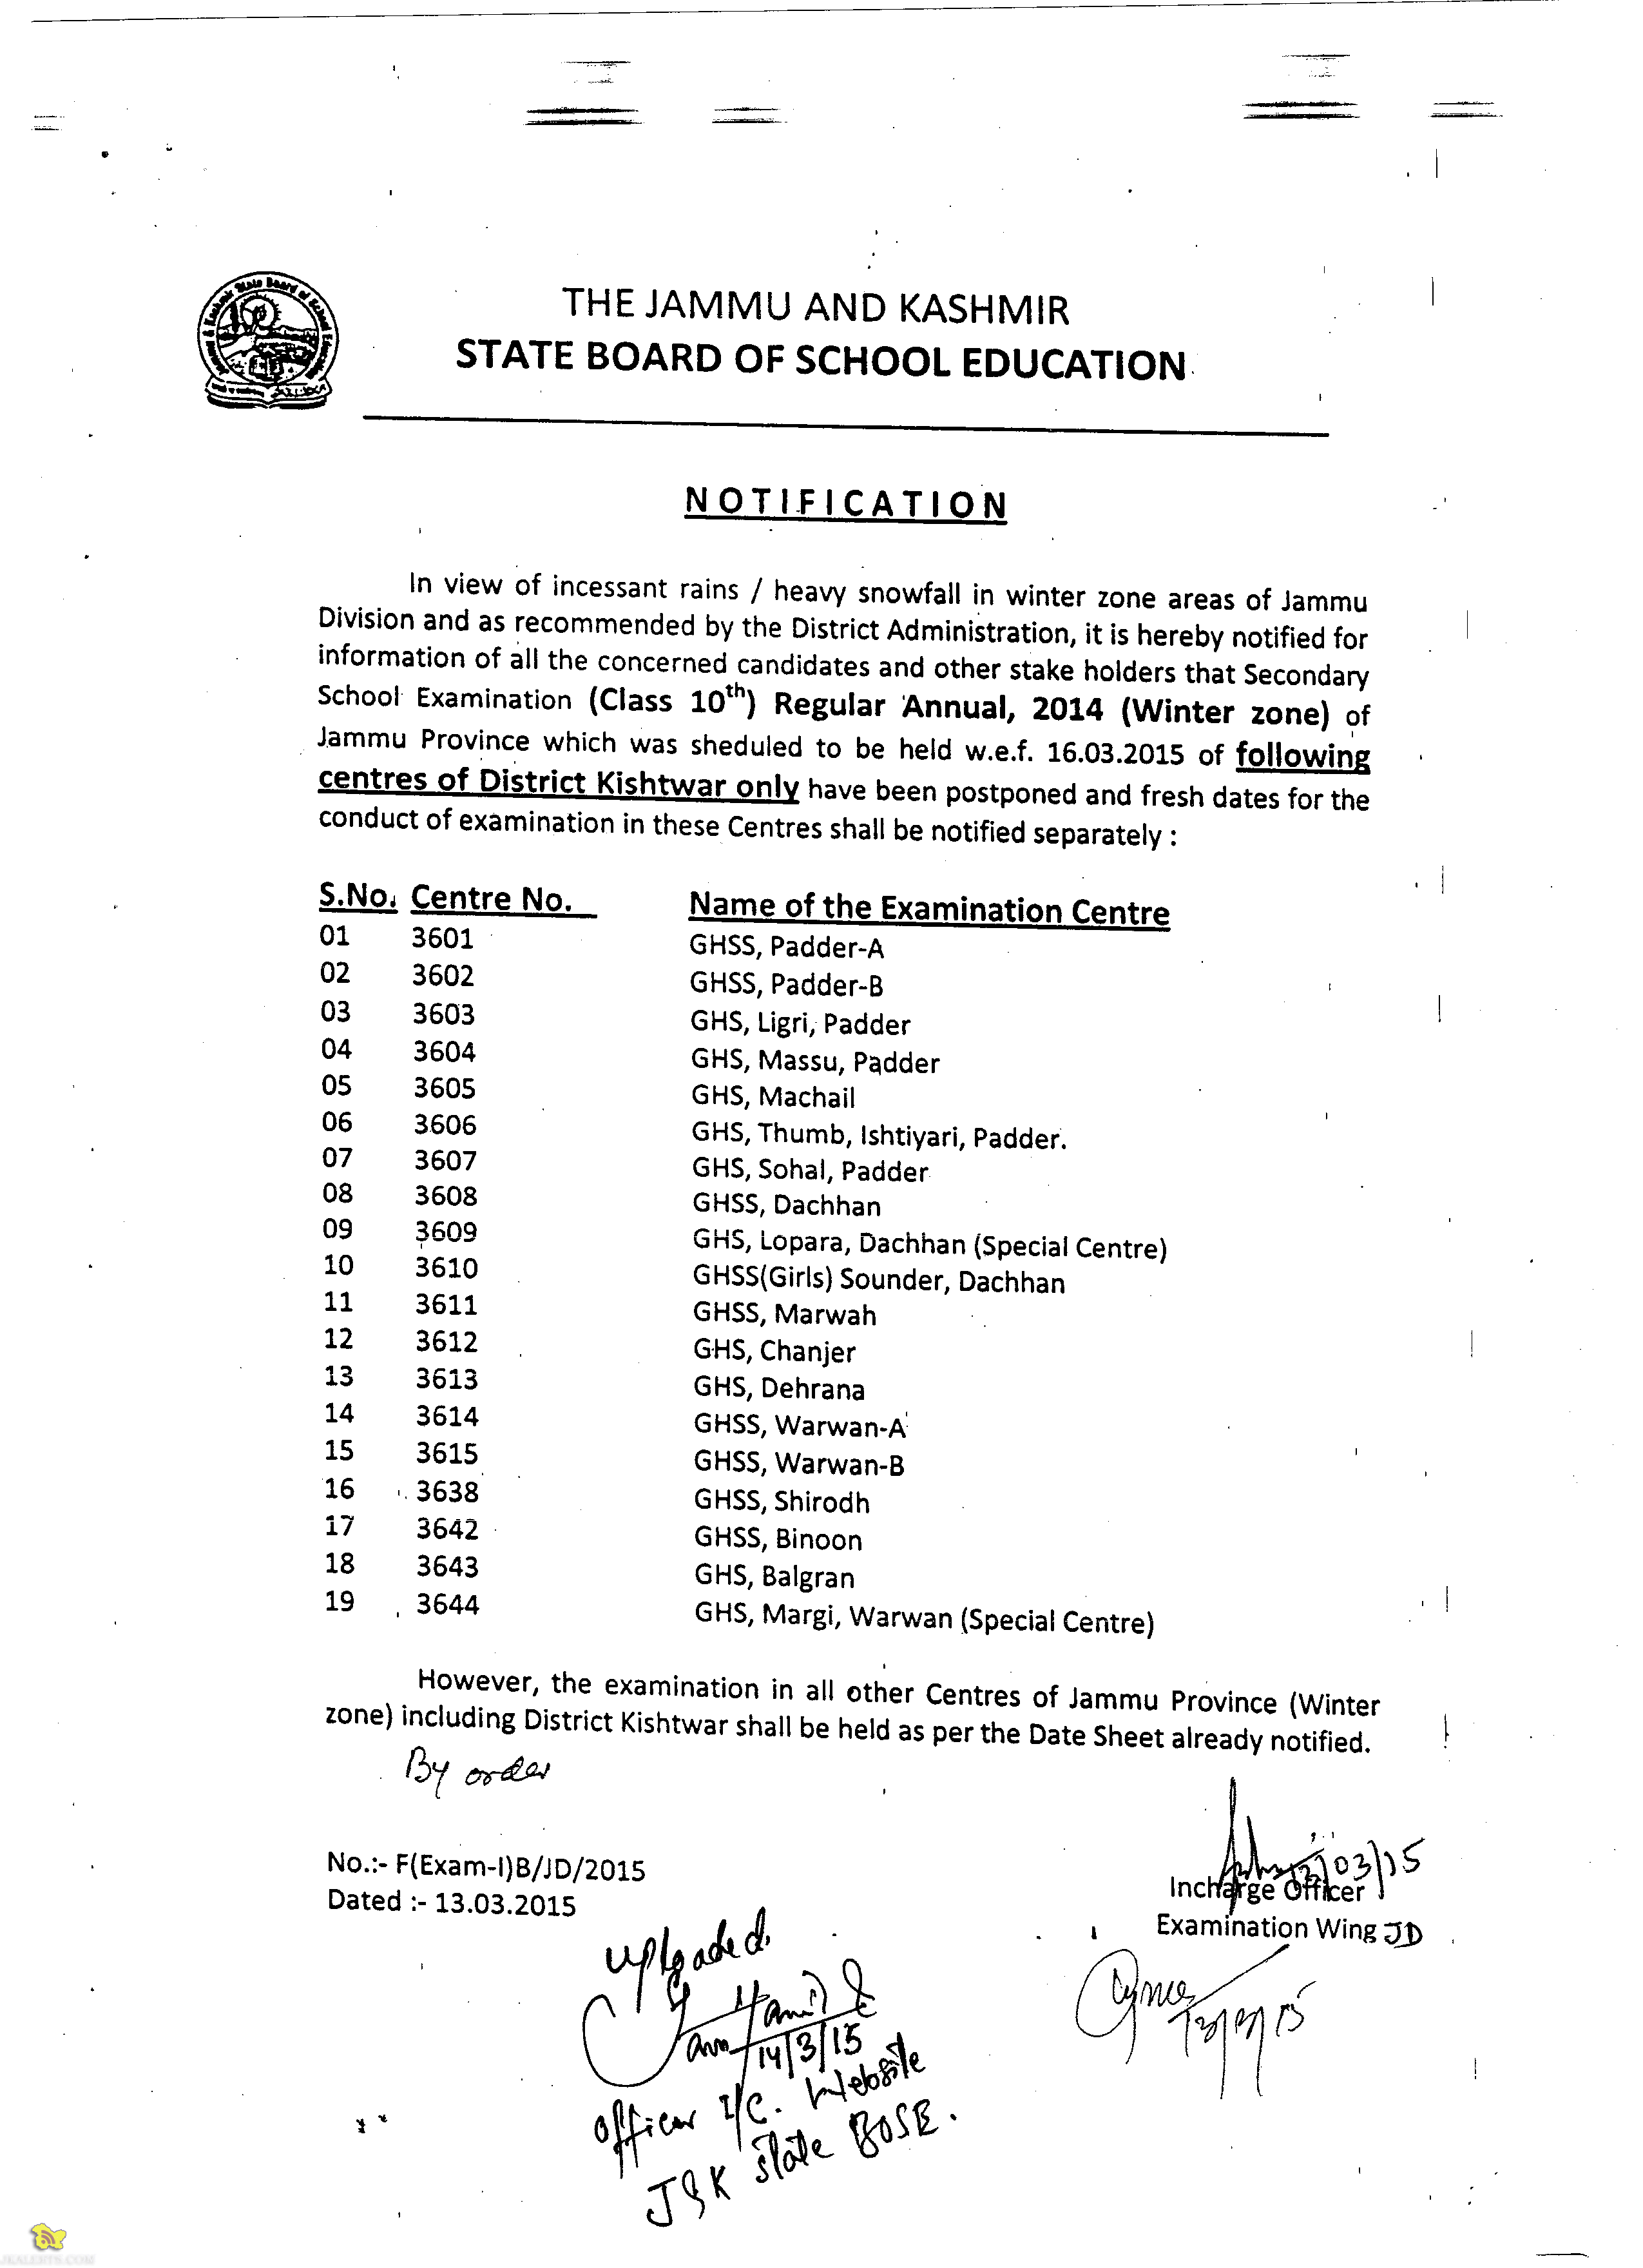 Class 10th Exams Postponed in Kistwar list of centres